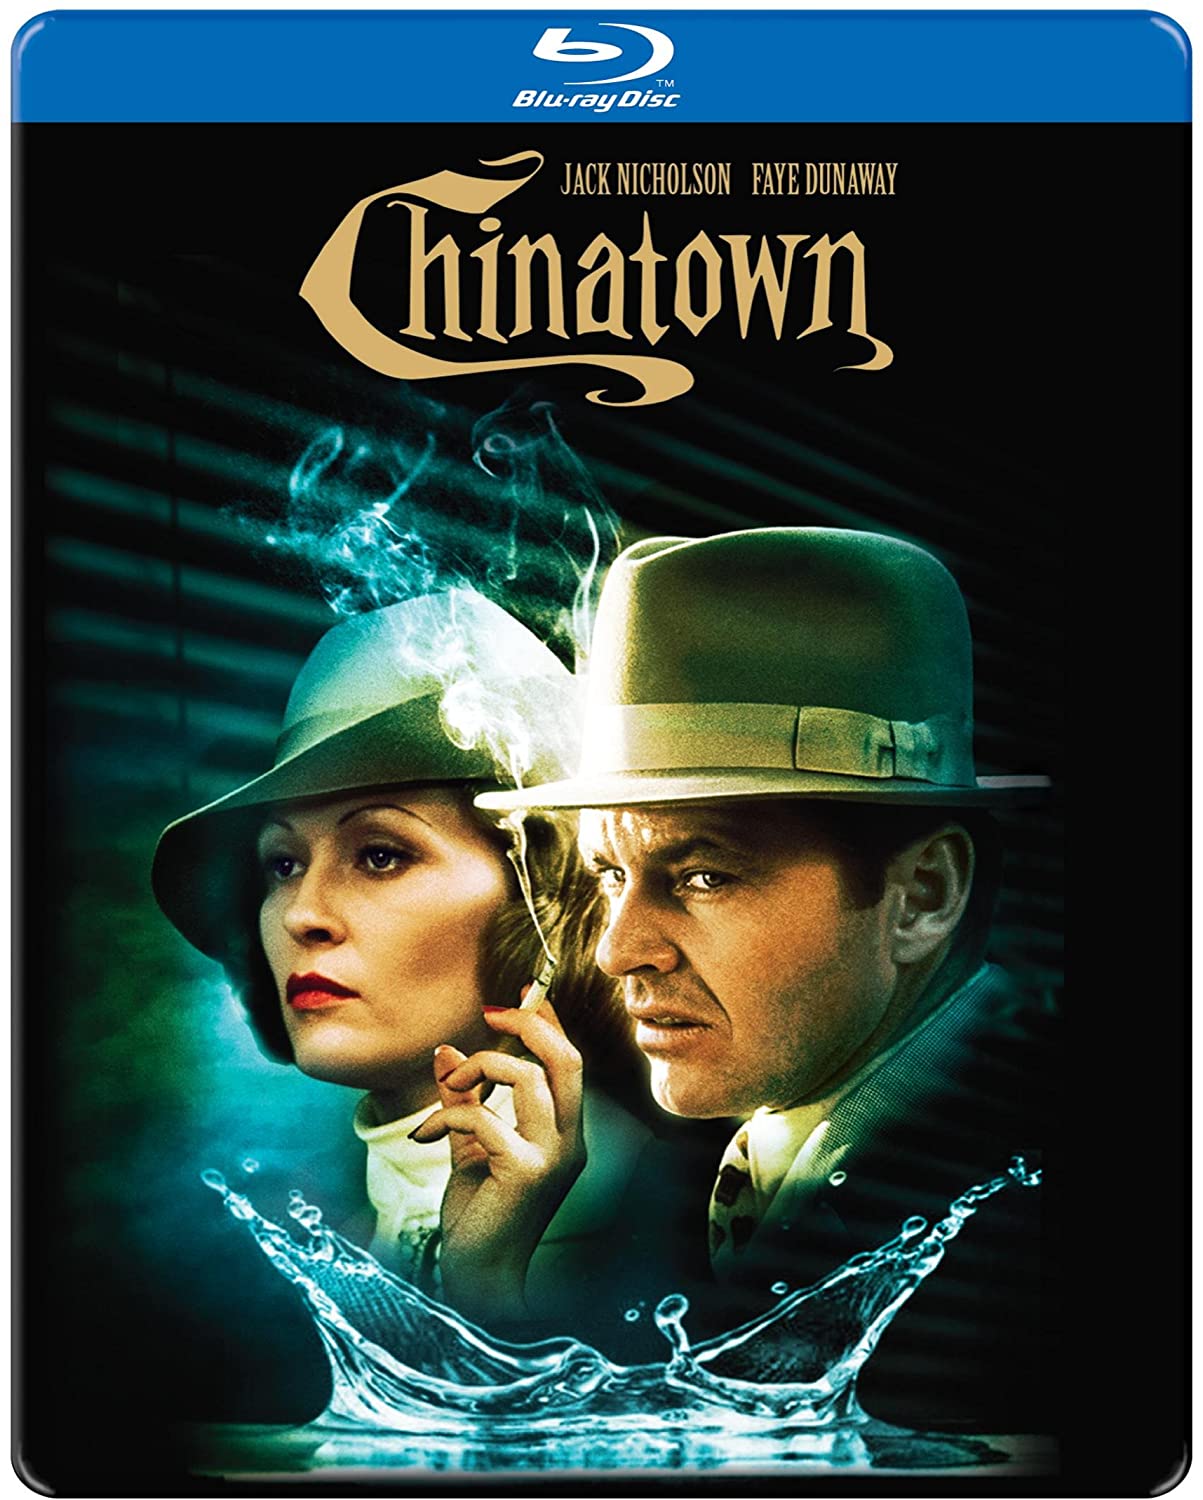 Chinatown (1974) HDtv | Clasicocine - Pelicula Dirigida Por Roman Polanski En 1974